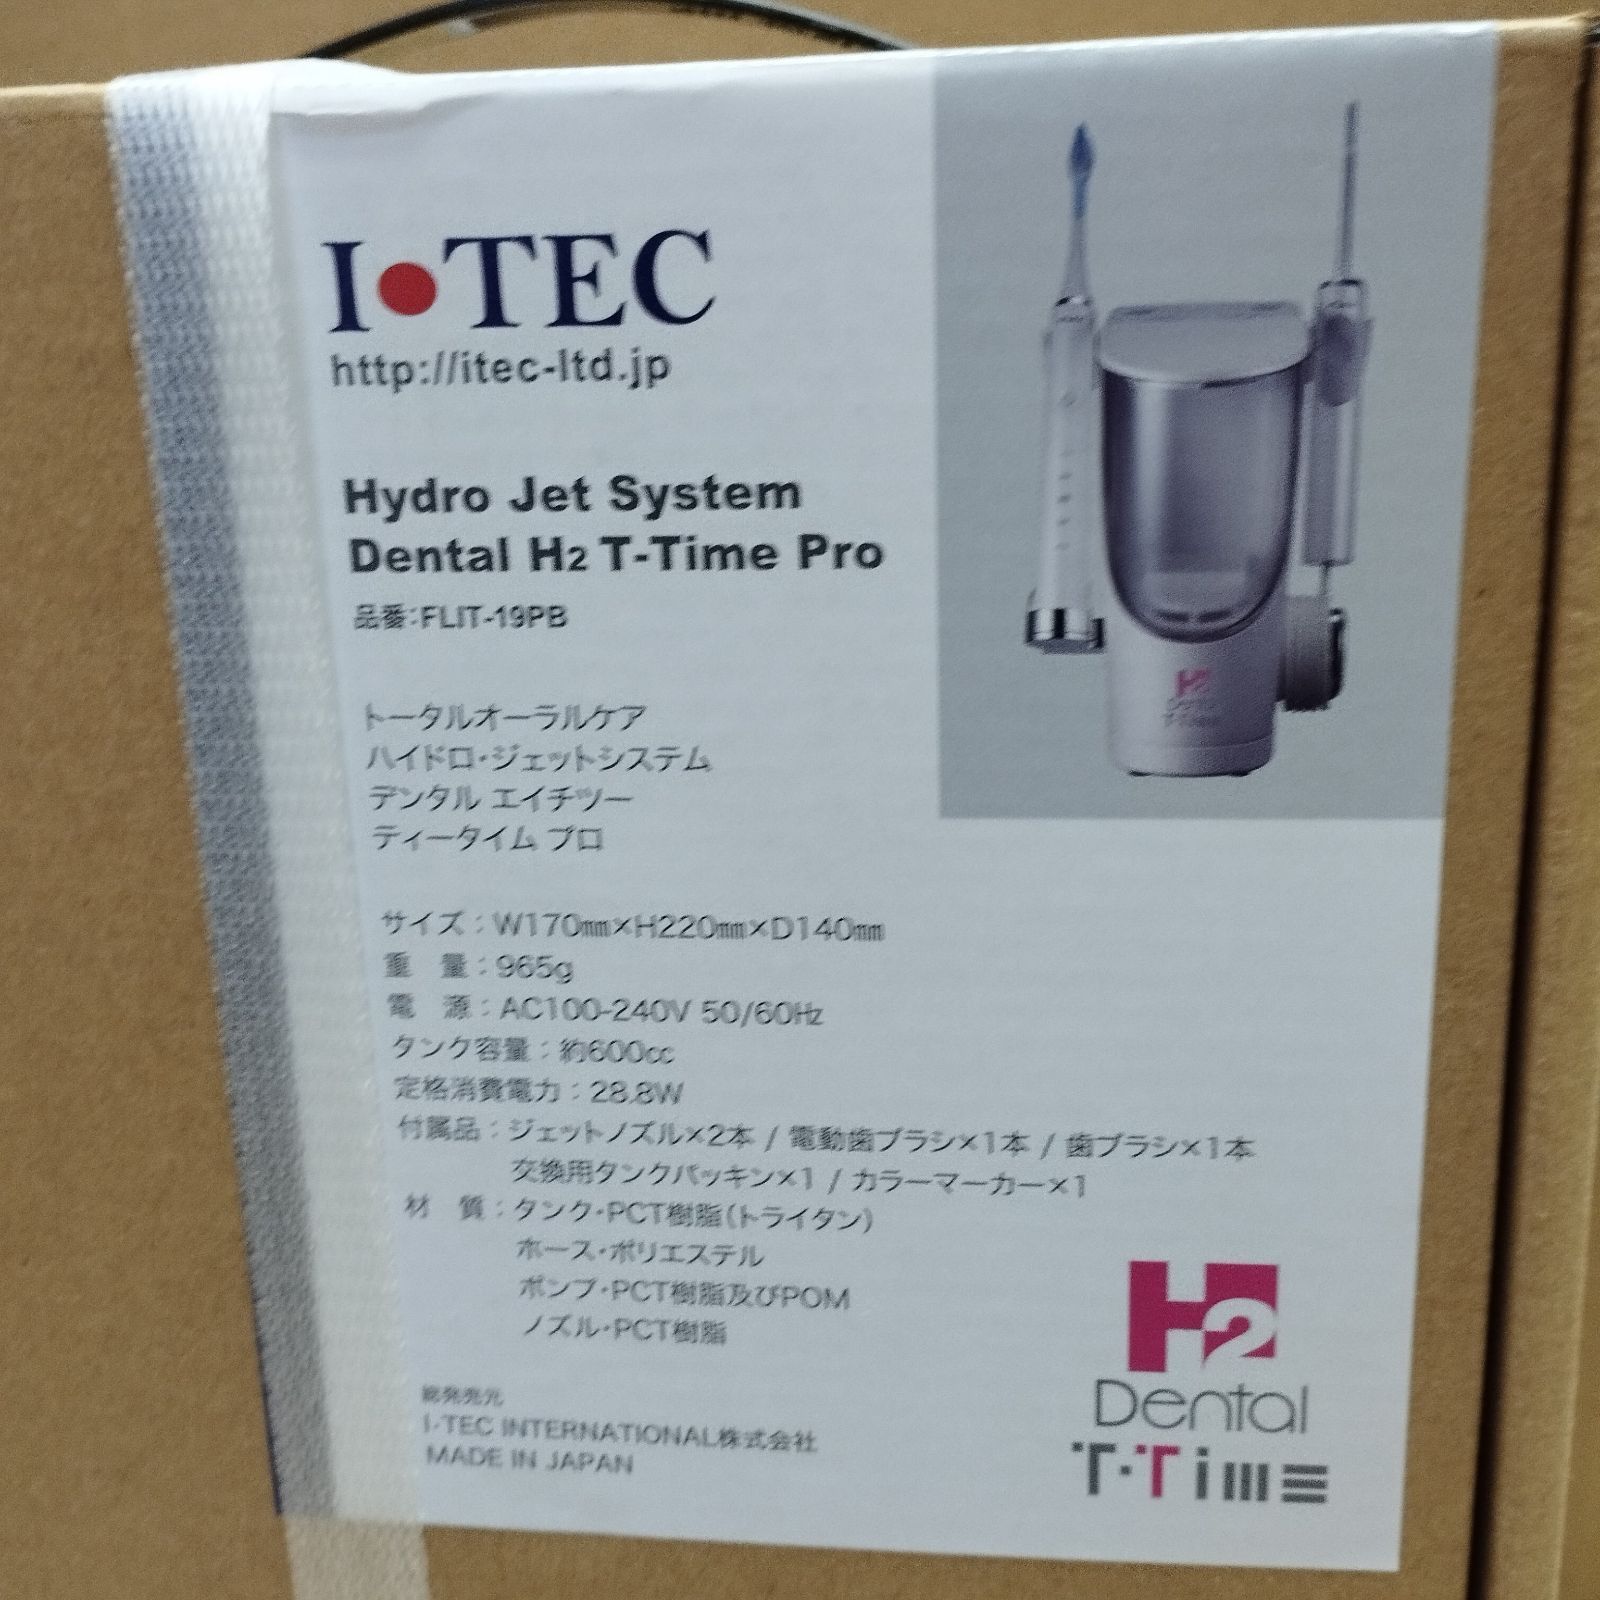 Dental H2 T-Time Pro ハイドロジェット付き電動歯ブラシ - 電動歯ブラシ